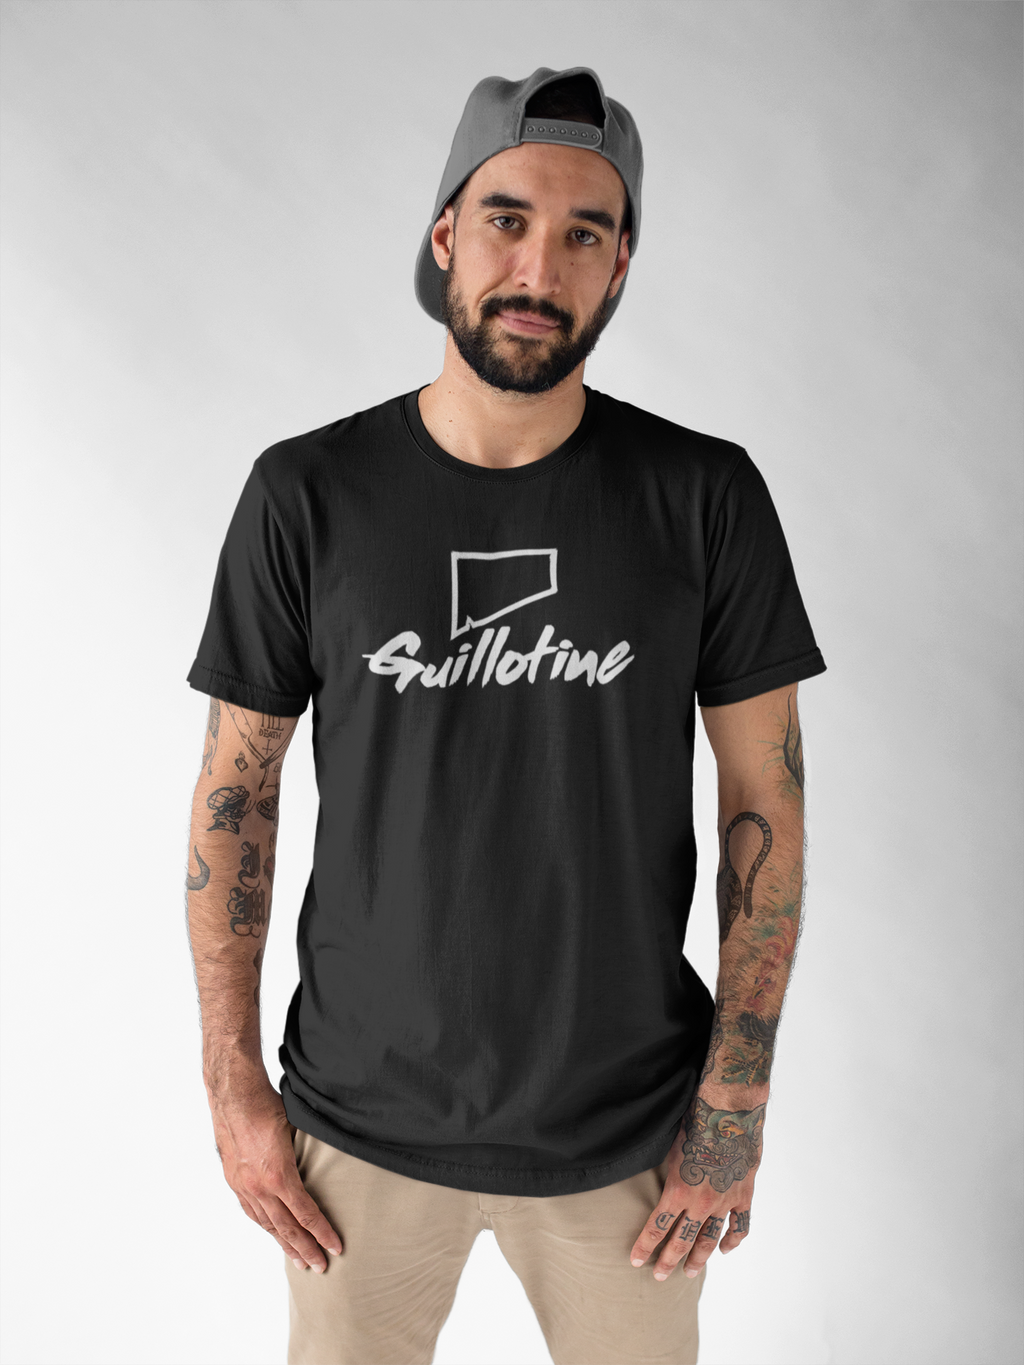 Guillotine T-Shirt